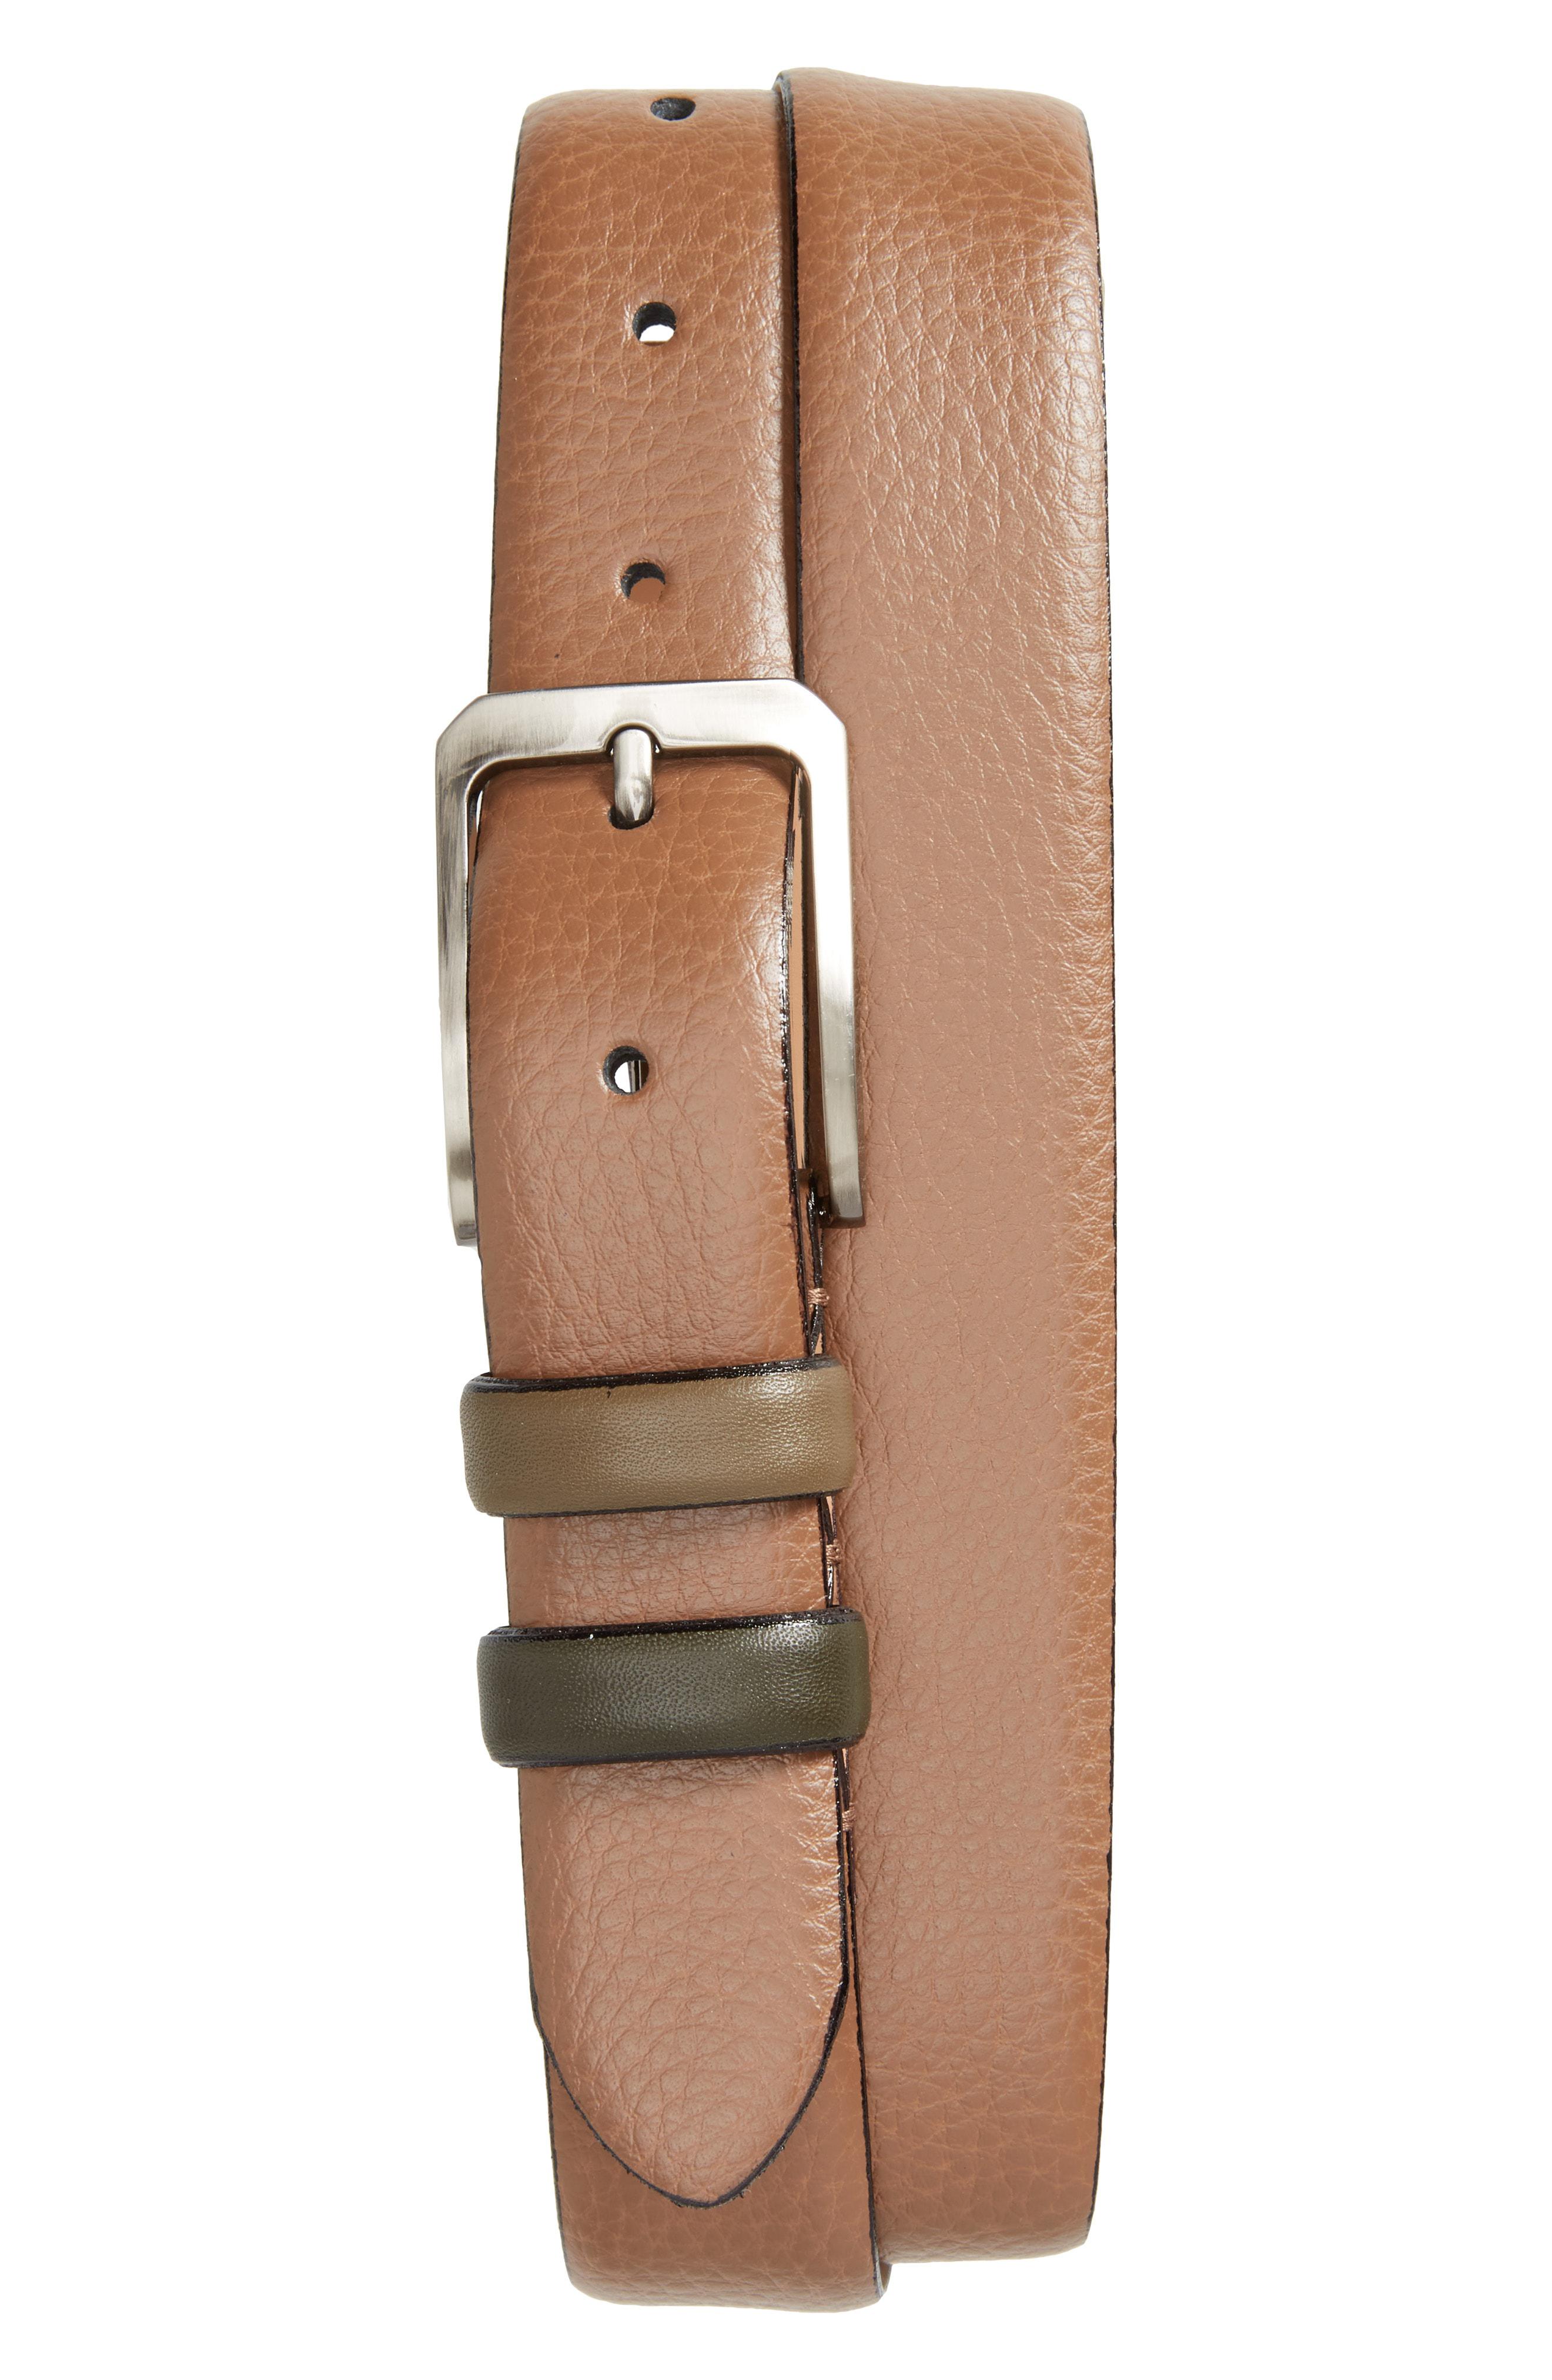 Ted Baker Shrubs Leather Belt in Tan (Brown) for Men - Lyst